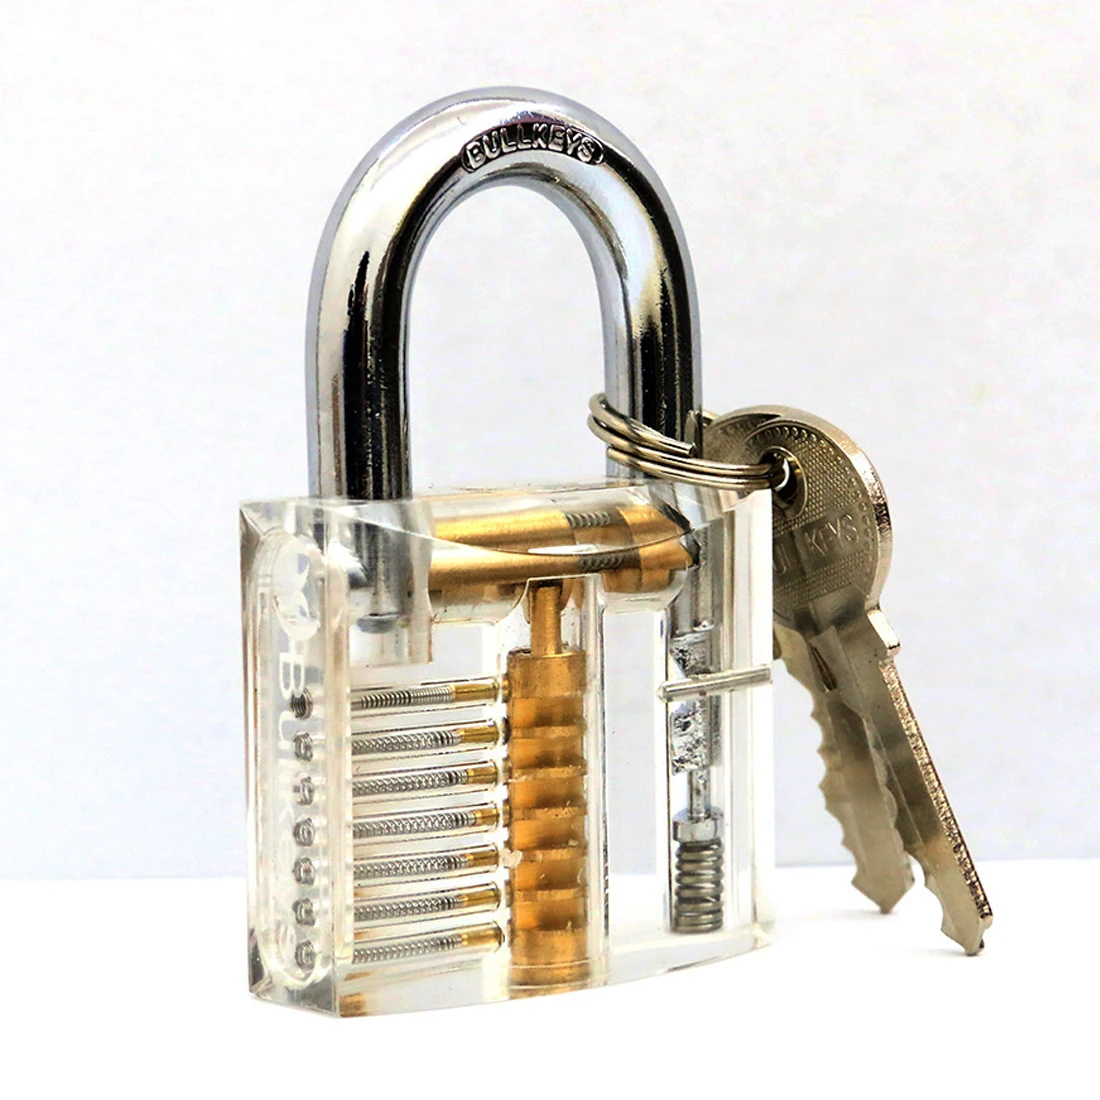 

Padlock Lock Training Skill Pick View Padlock Cutaway Inside View Of Practice Transparent For Locksmith With Smart Keys